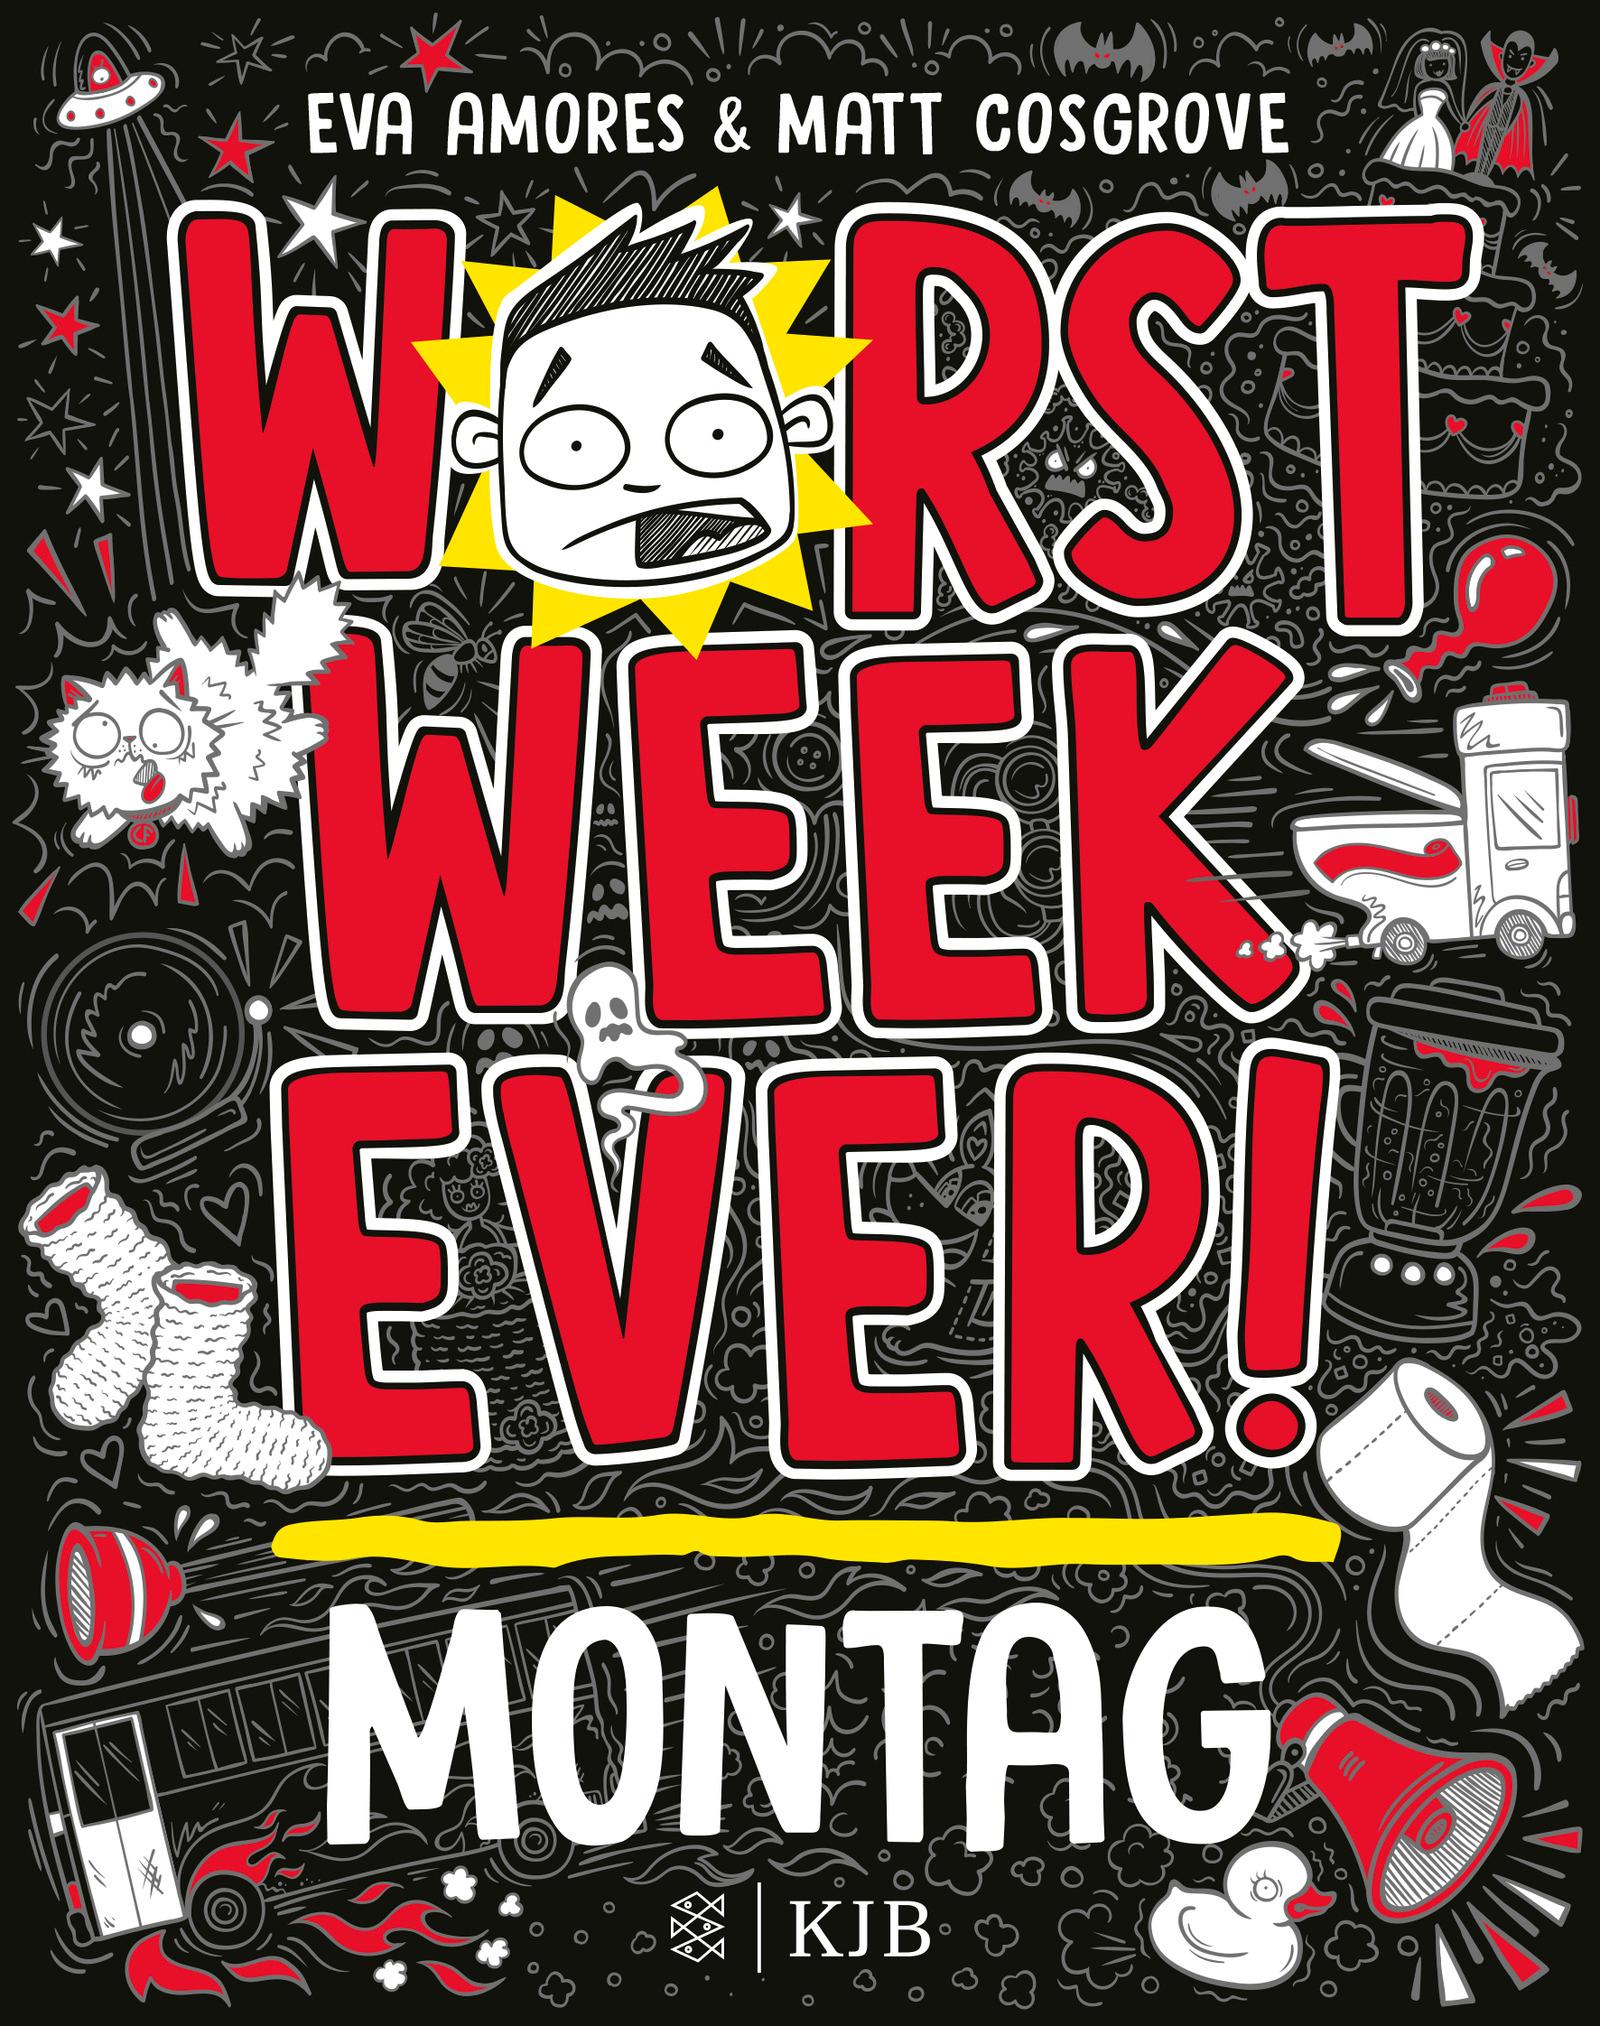 Worst Week Ever  - Montag